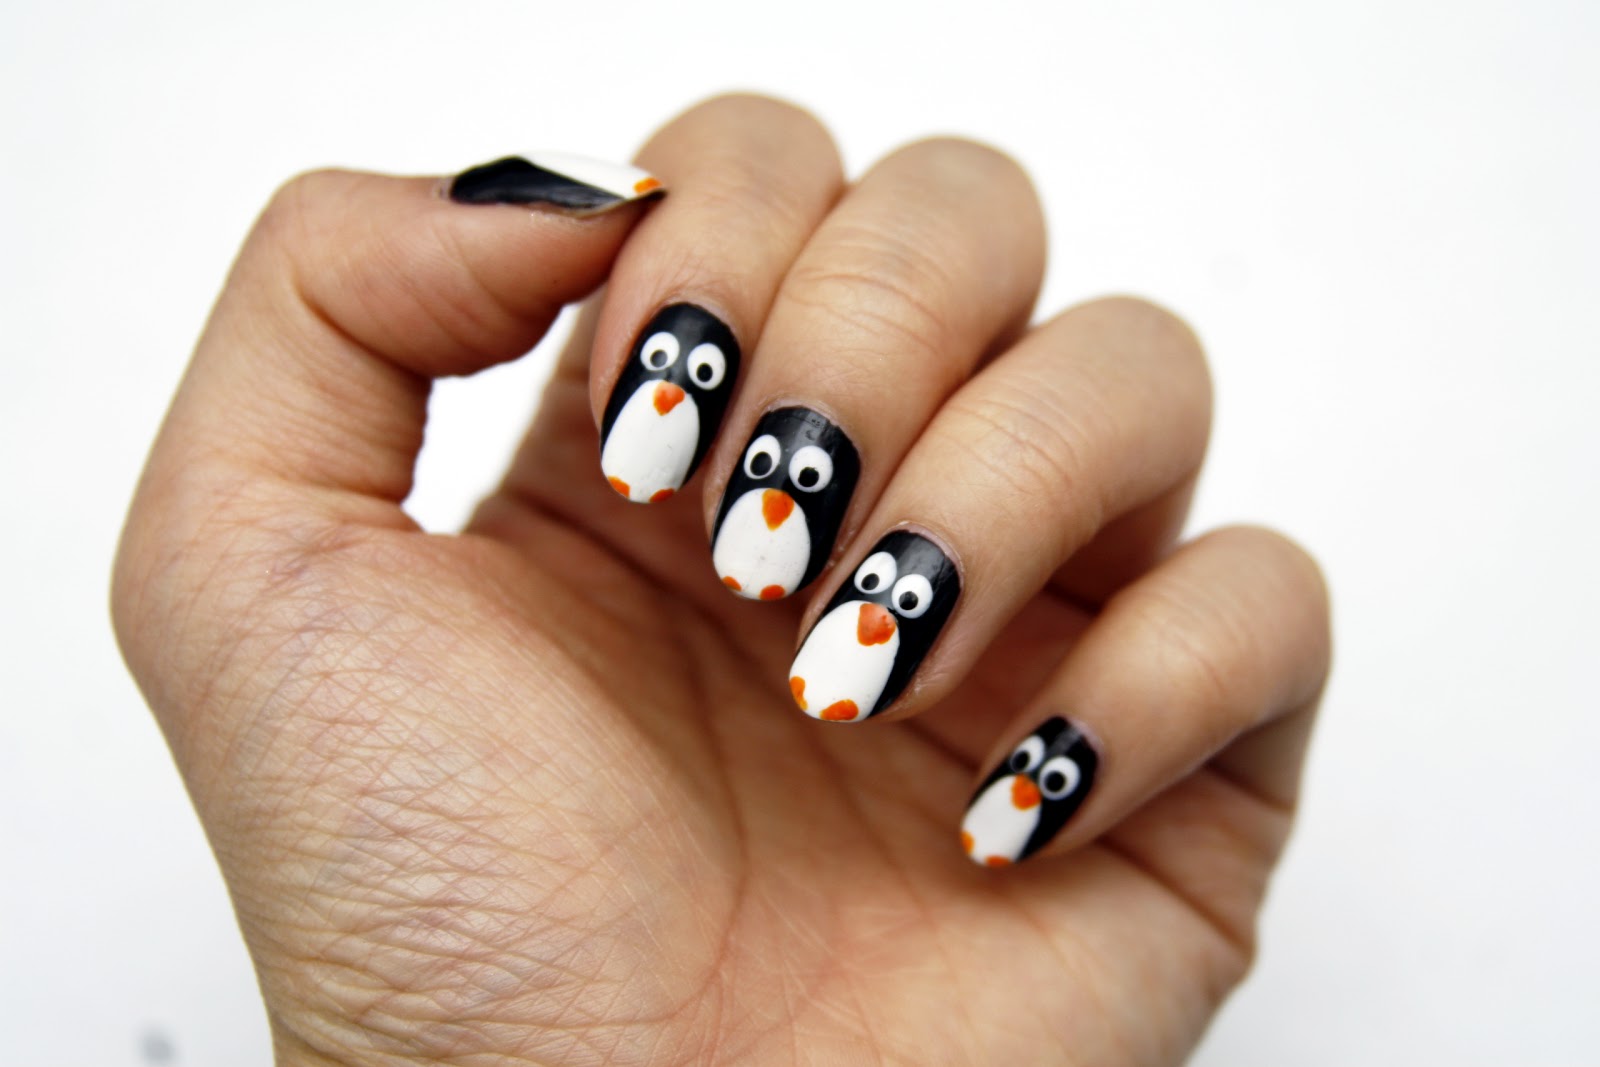 7. Cute Penguin Nail Art - wide 5